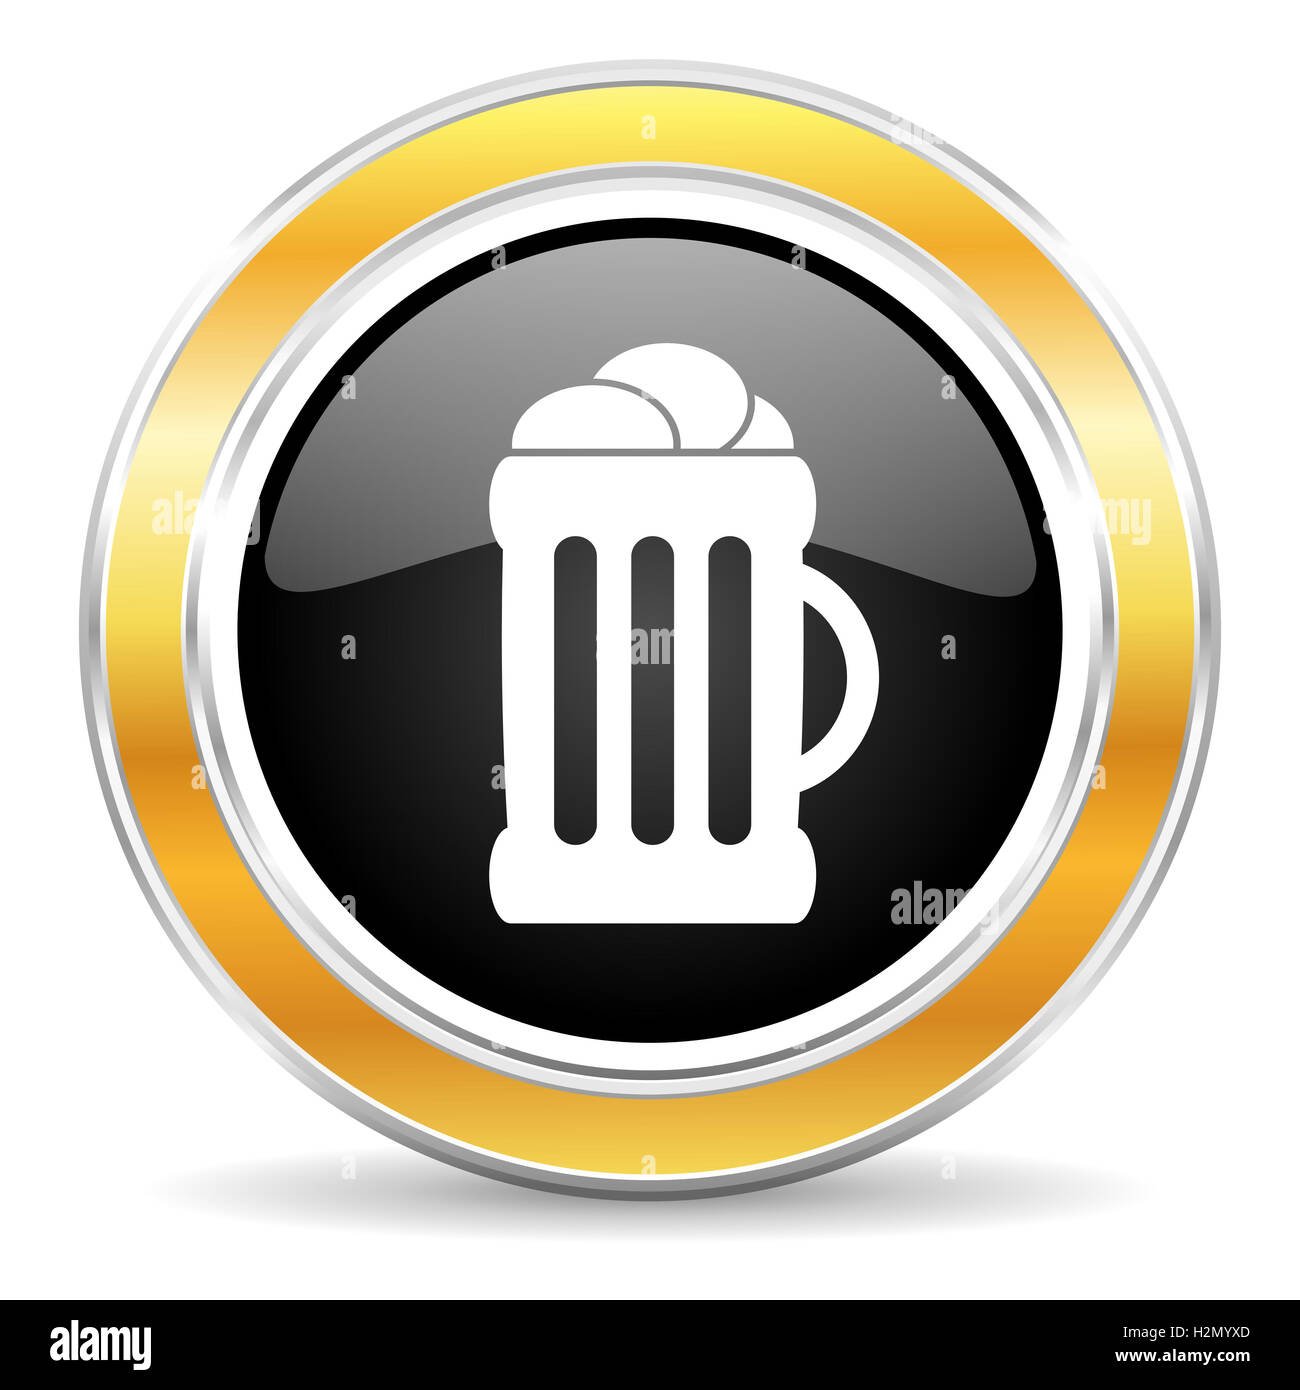 beer icon Stock Photo